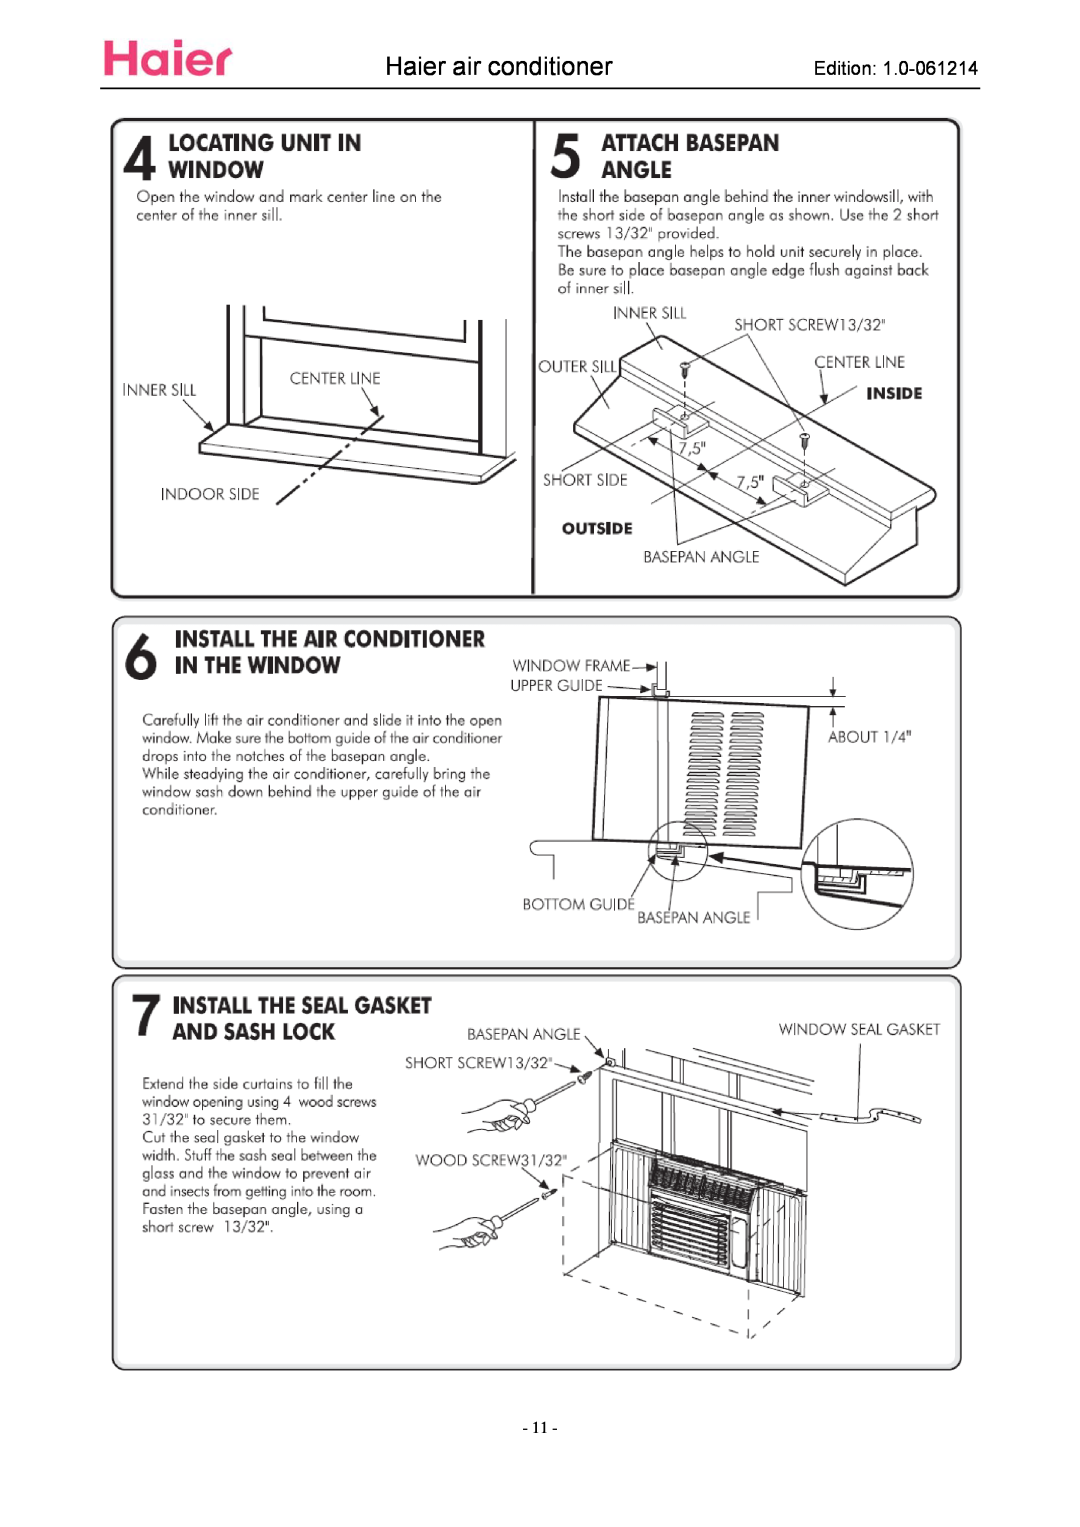 Haier ESA3087 service manual Haier air conditioner, Edition 